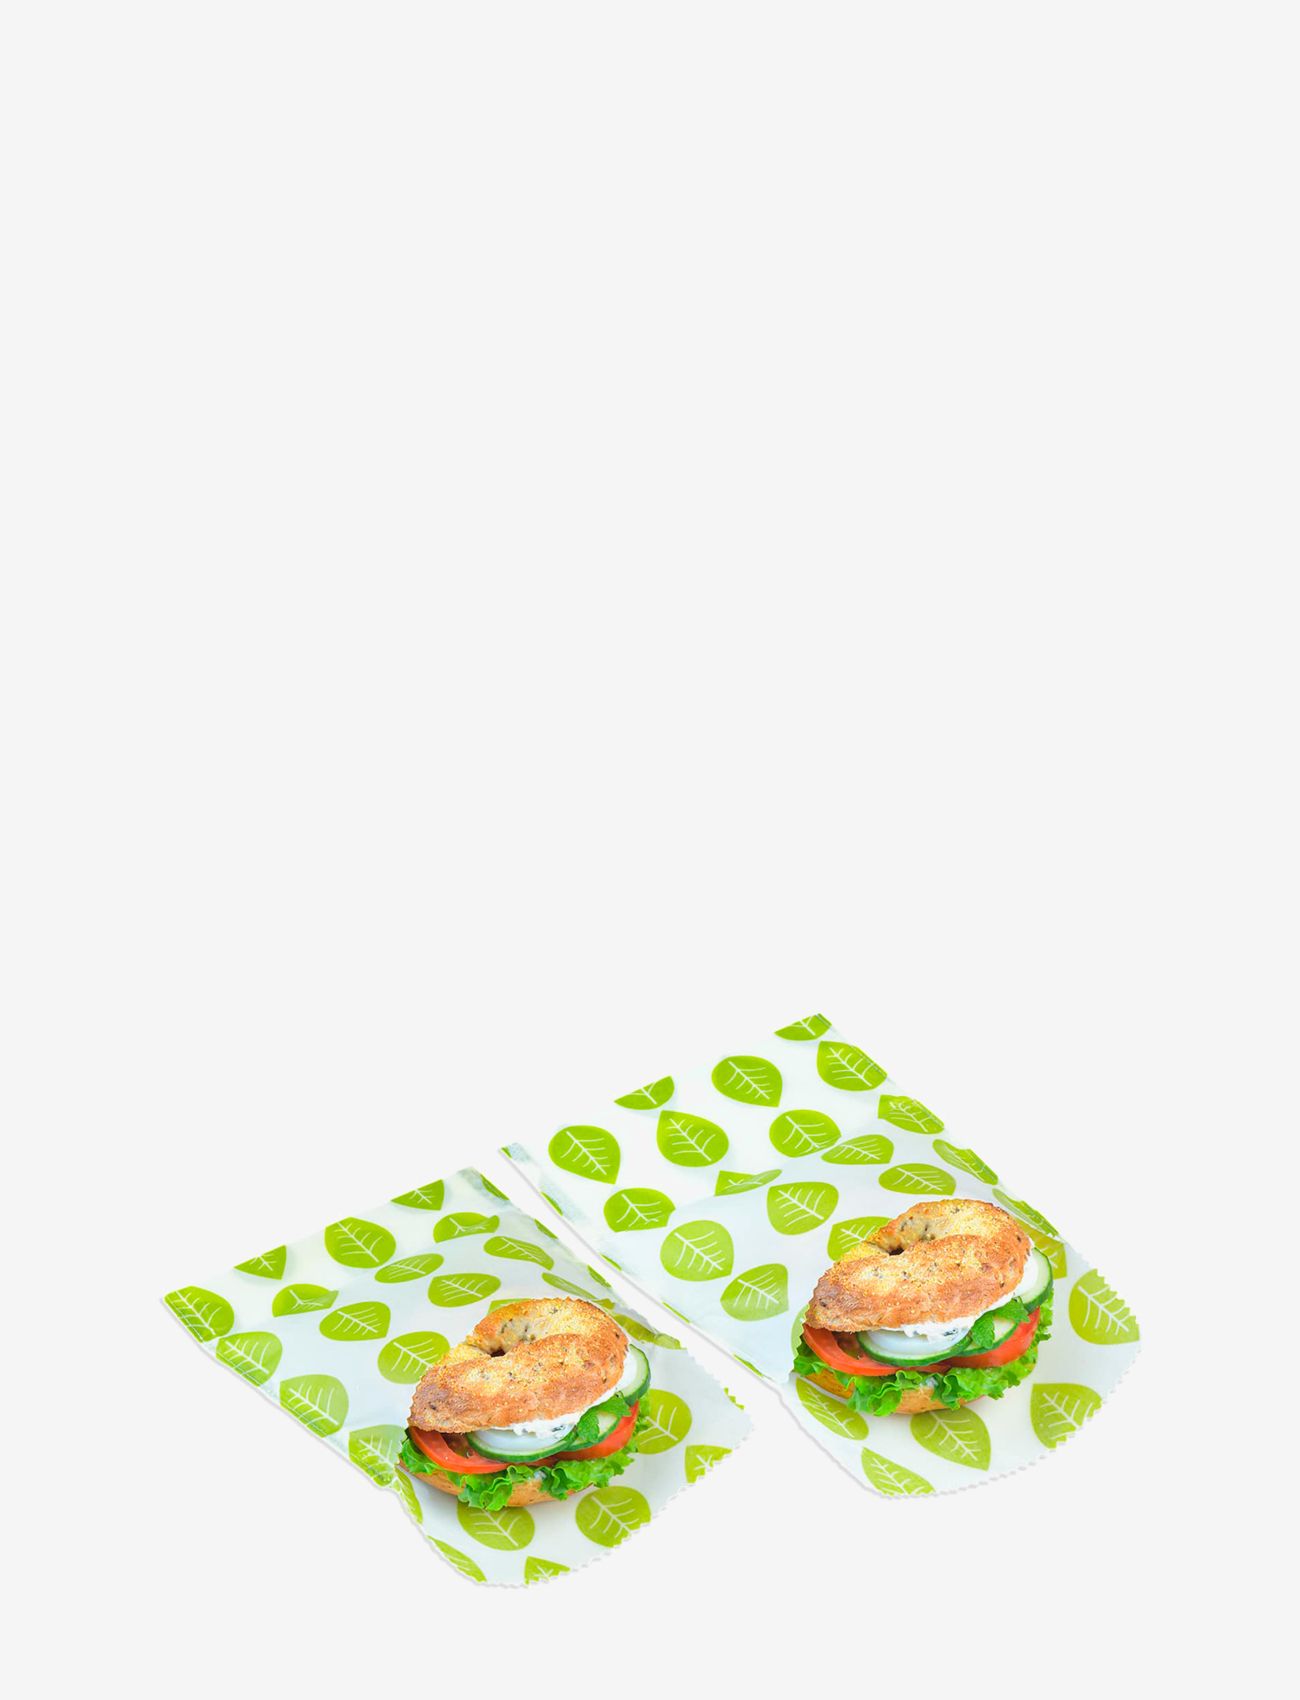 Vegan Wax Wrap Snack & Sandwich 2 pcs set